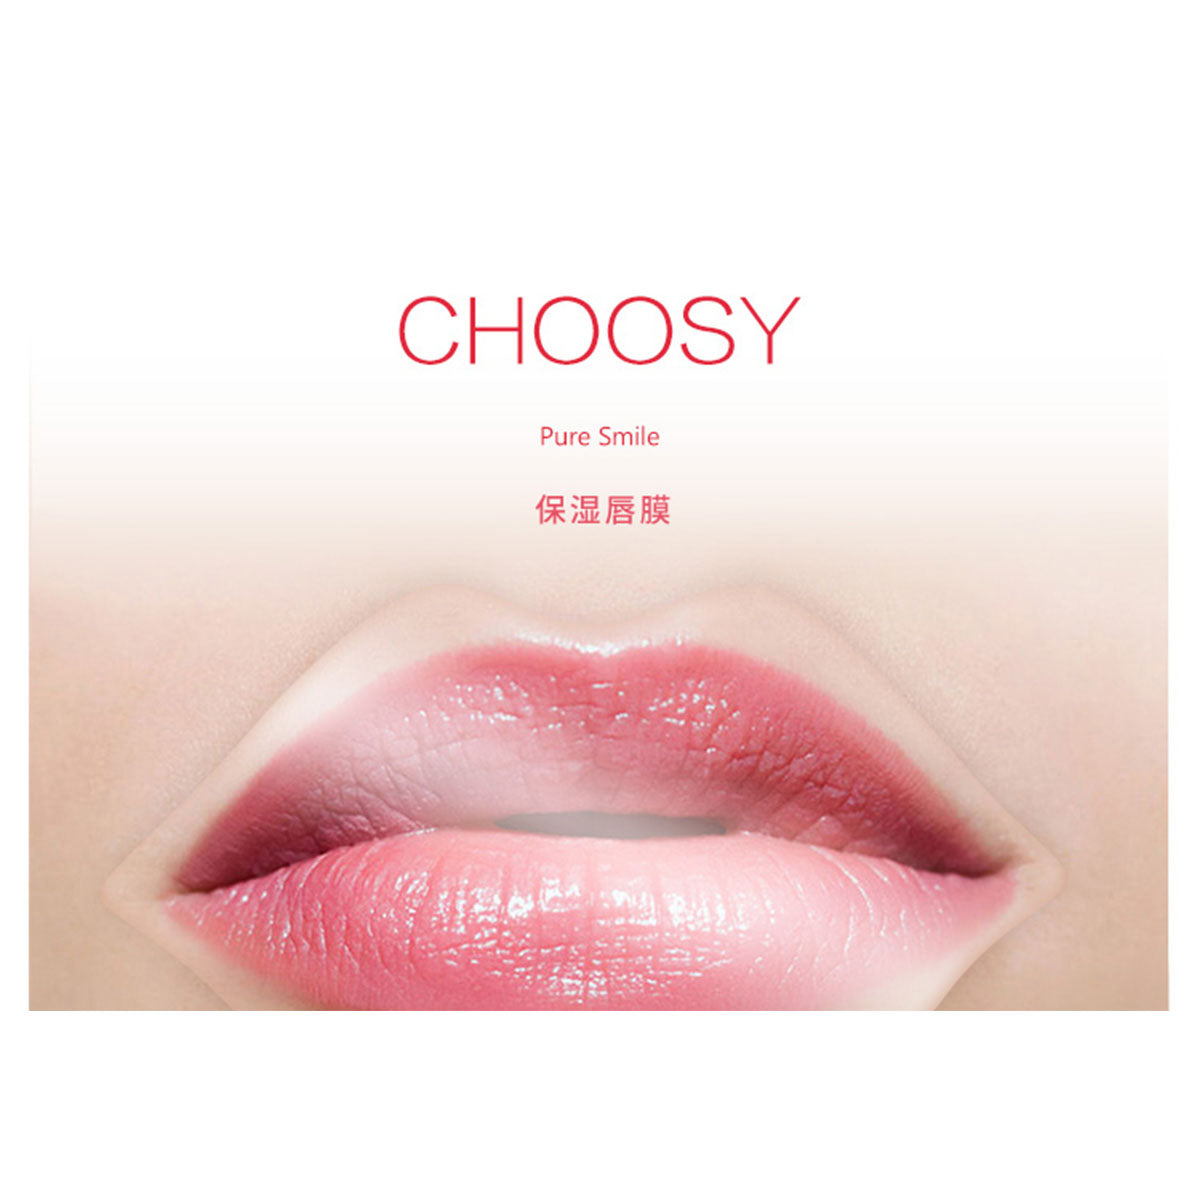 Pure Smile Choosy Lip Care Sheet Mask #White Pearl 1pcs